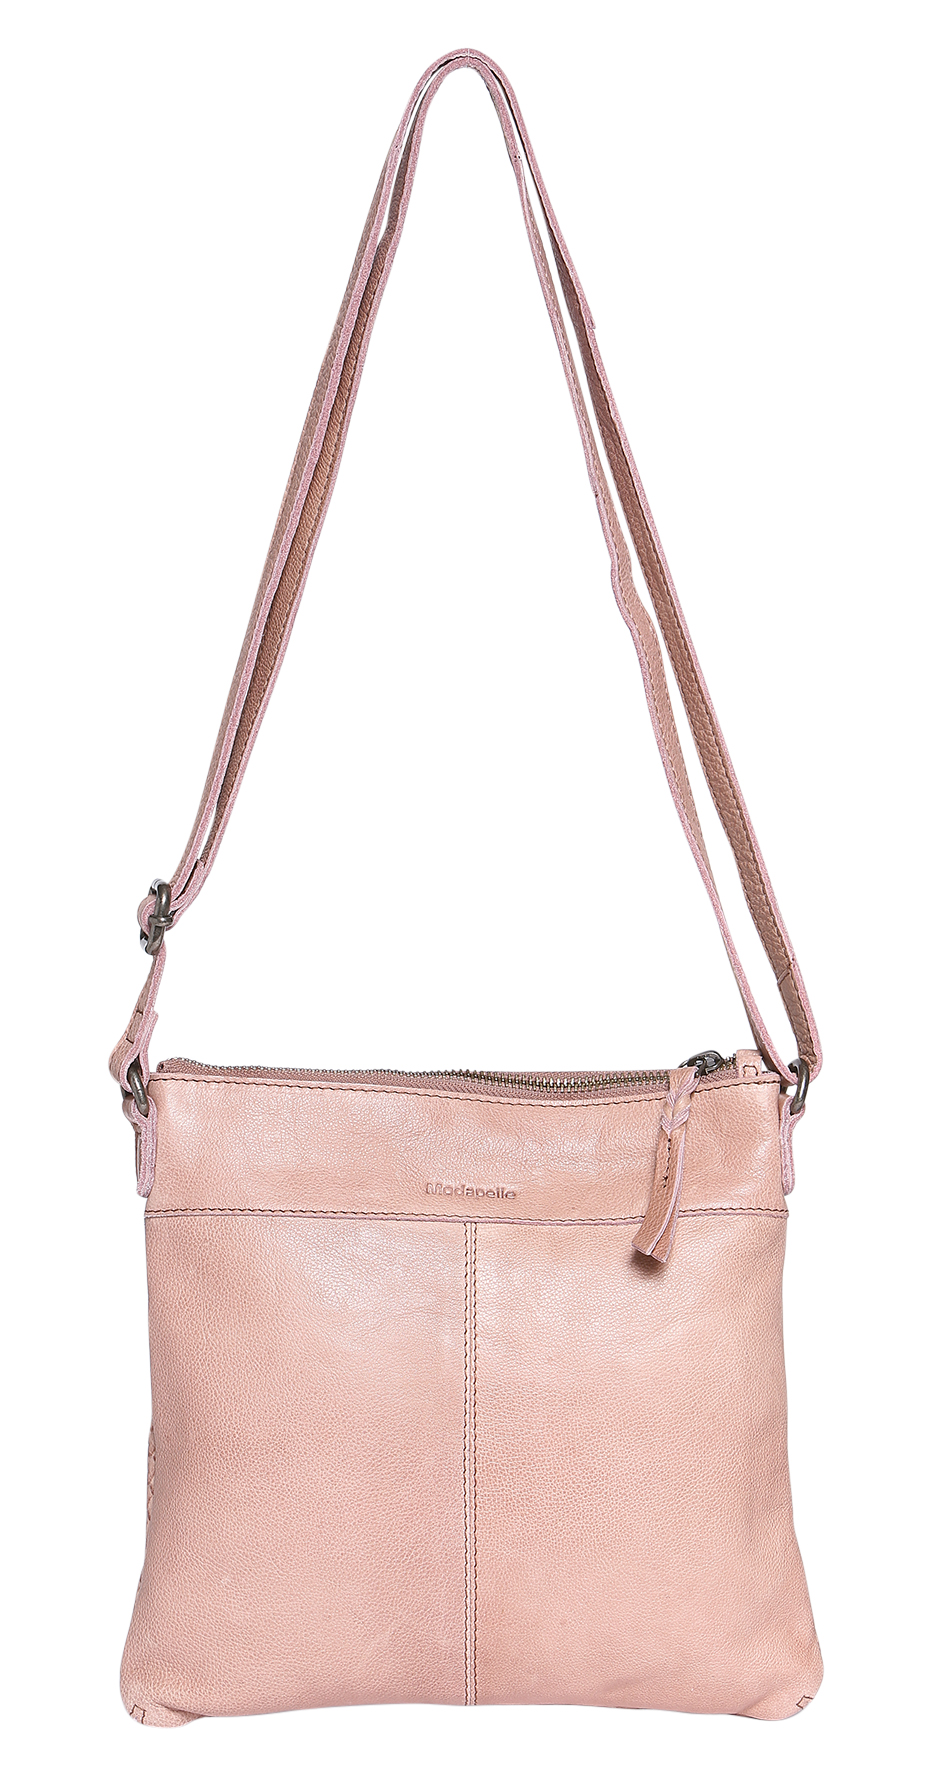 38-43 Inch Adjustable PU Leather Strap Replacement Cross Body Purse Handbag  Bag Shoulder Bag Wallet Strap (Pink)